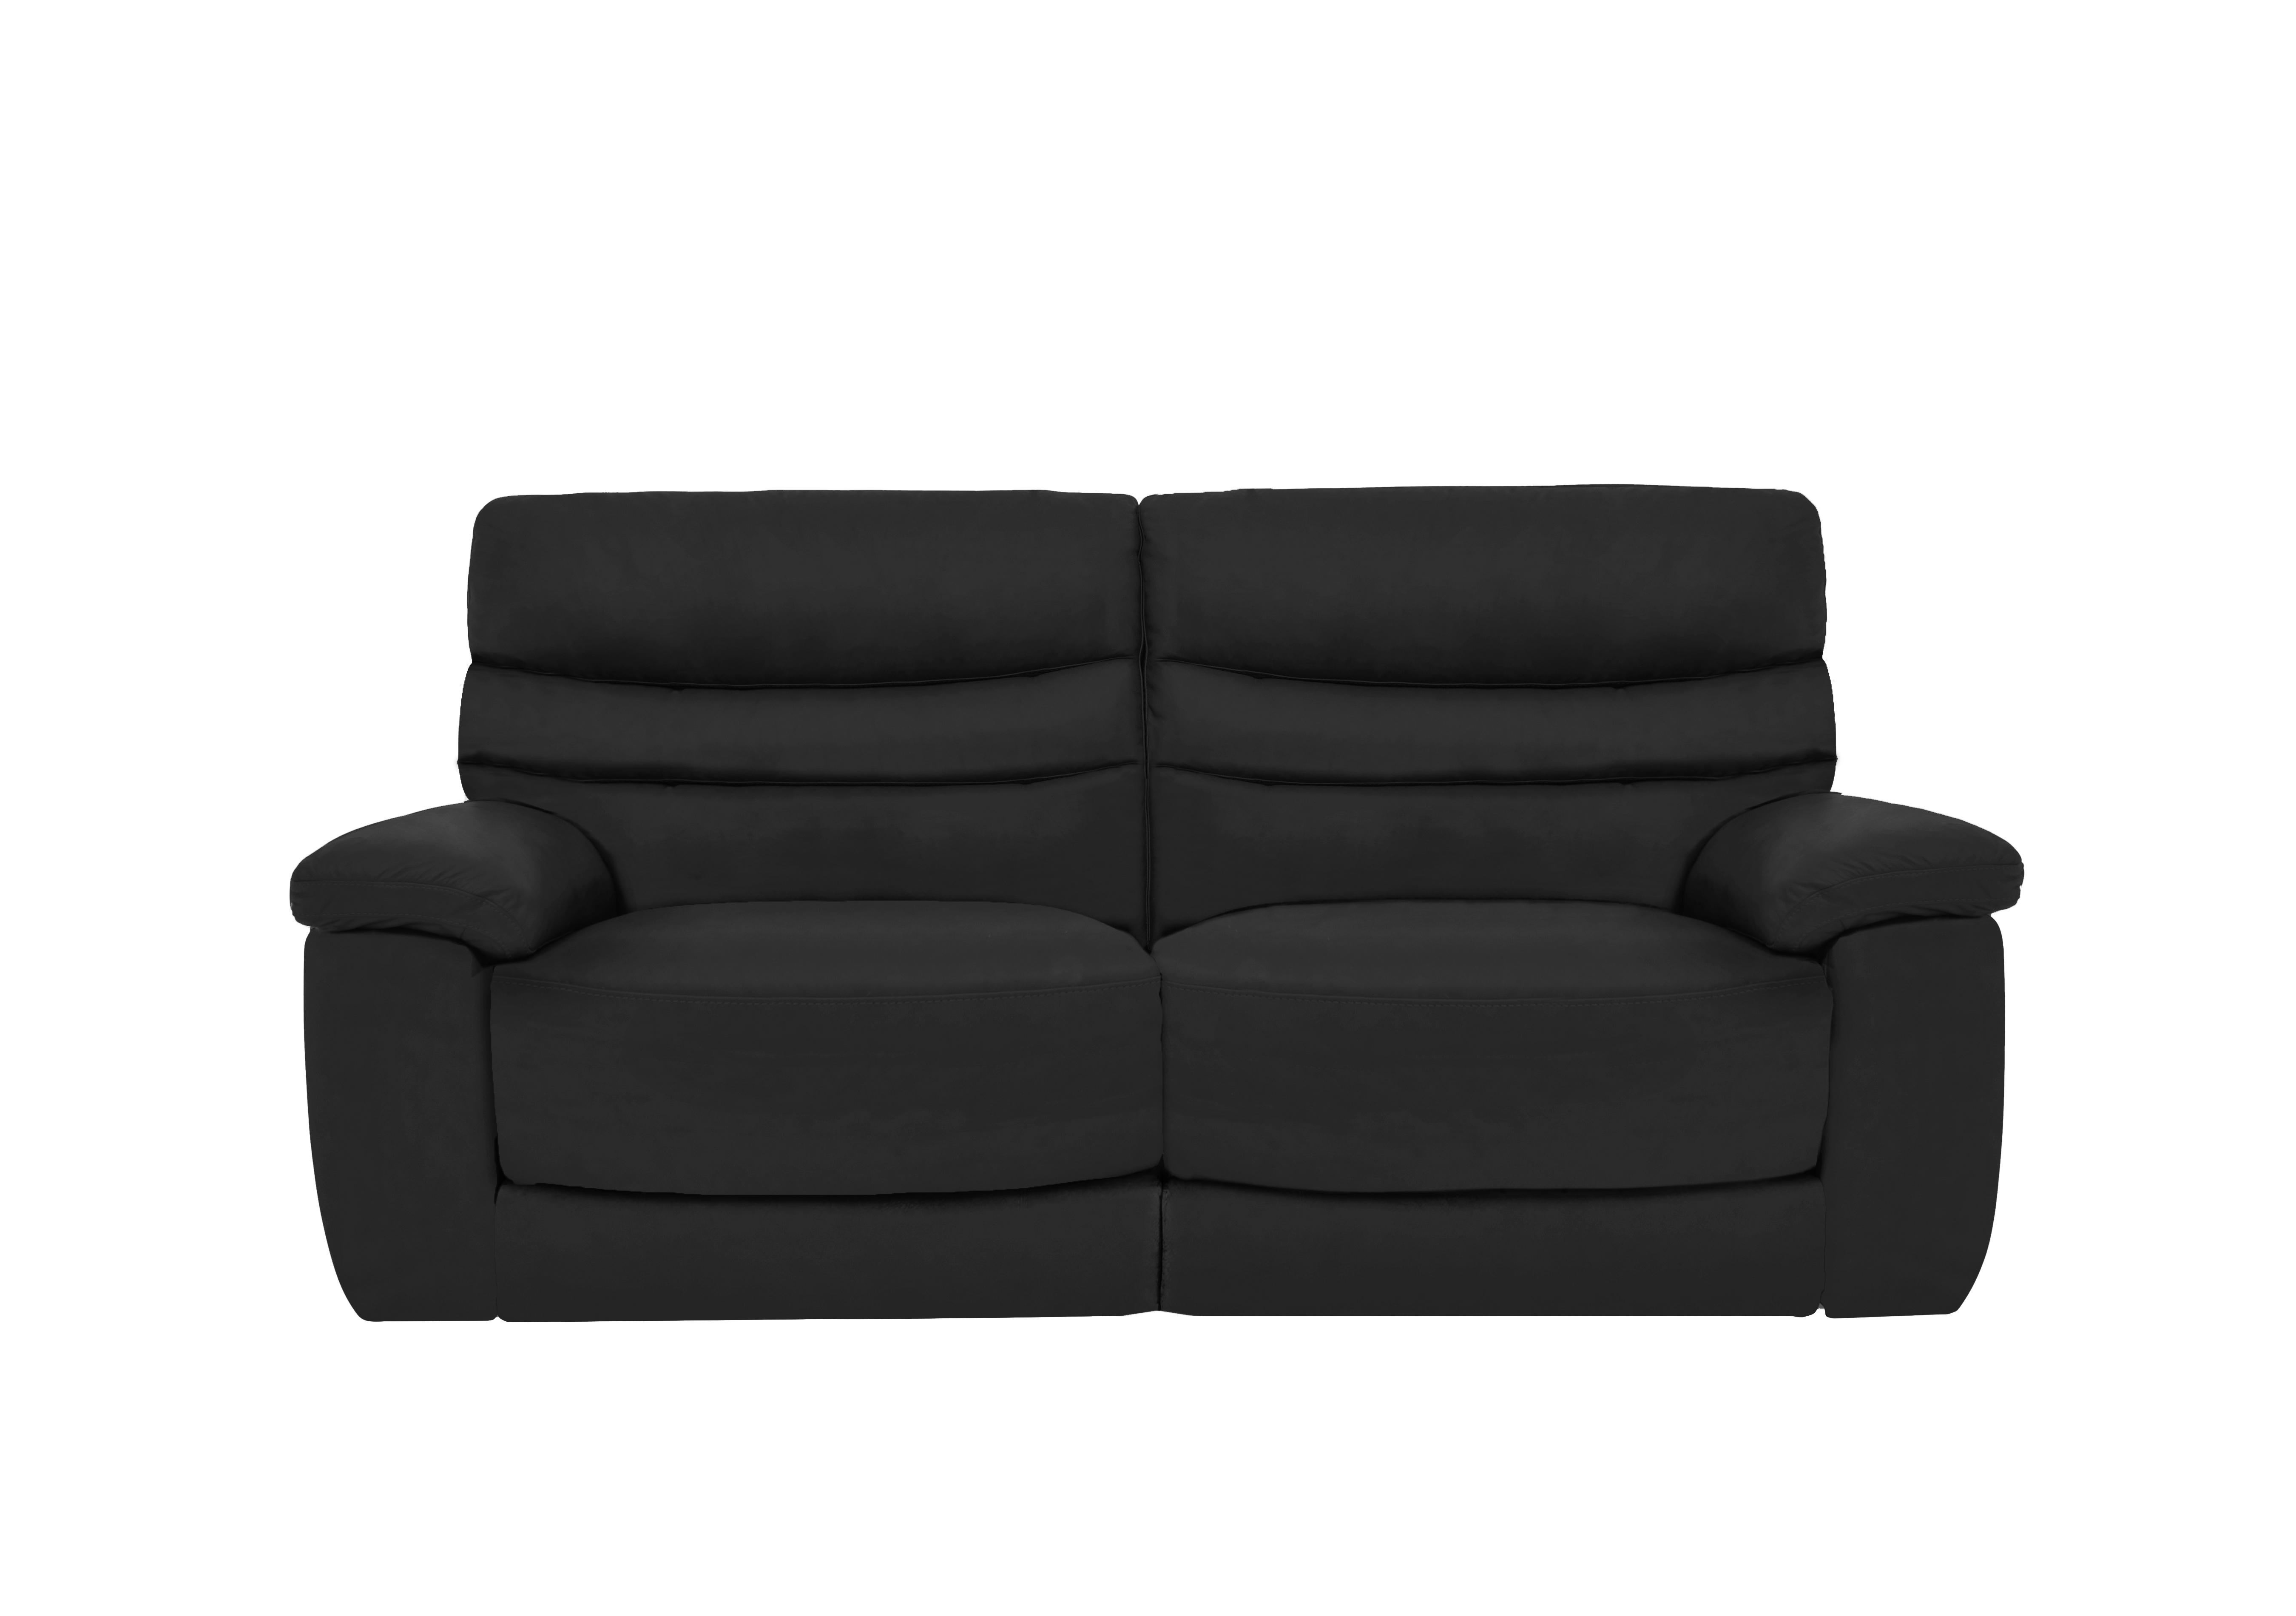 Nimbus 3 Seater Leather Sofa in Bx-023c Black on Furniture Village